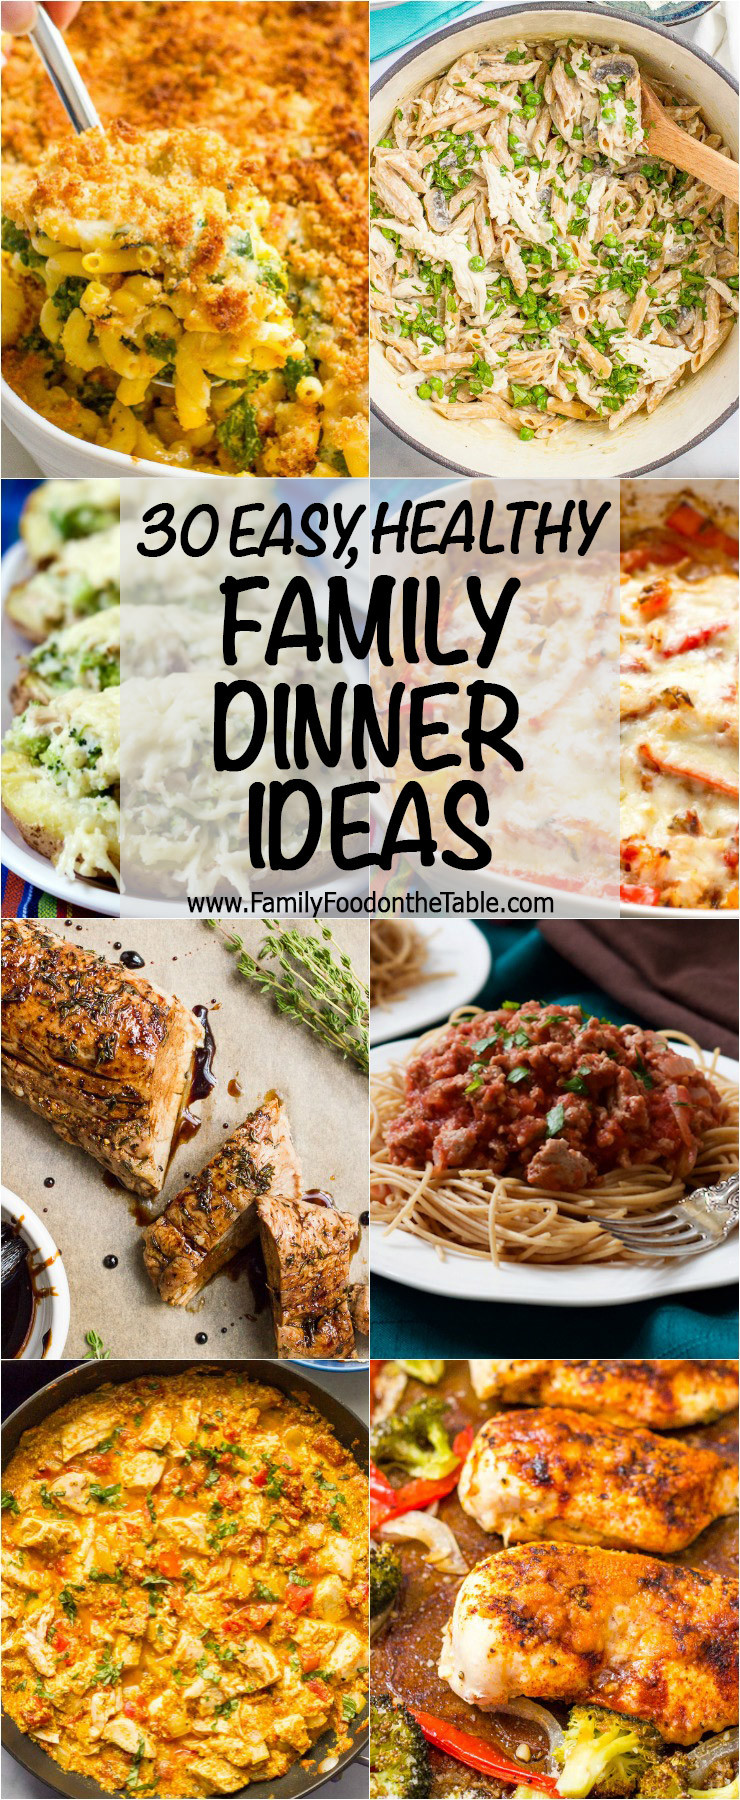 Healthy Dinner Ideas For Family
 30 easy healthy family dinner ideas Family Food on the Table